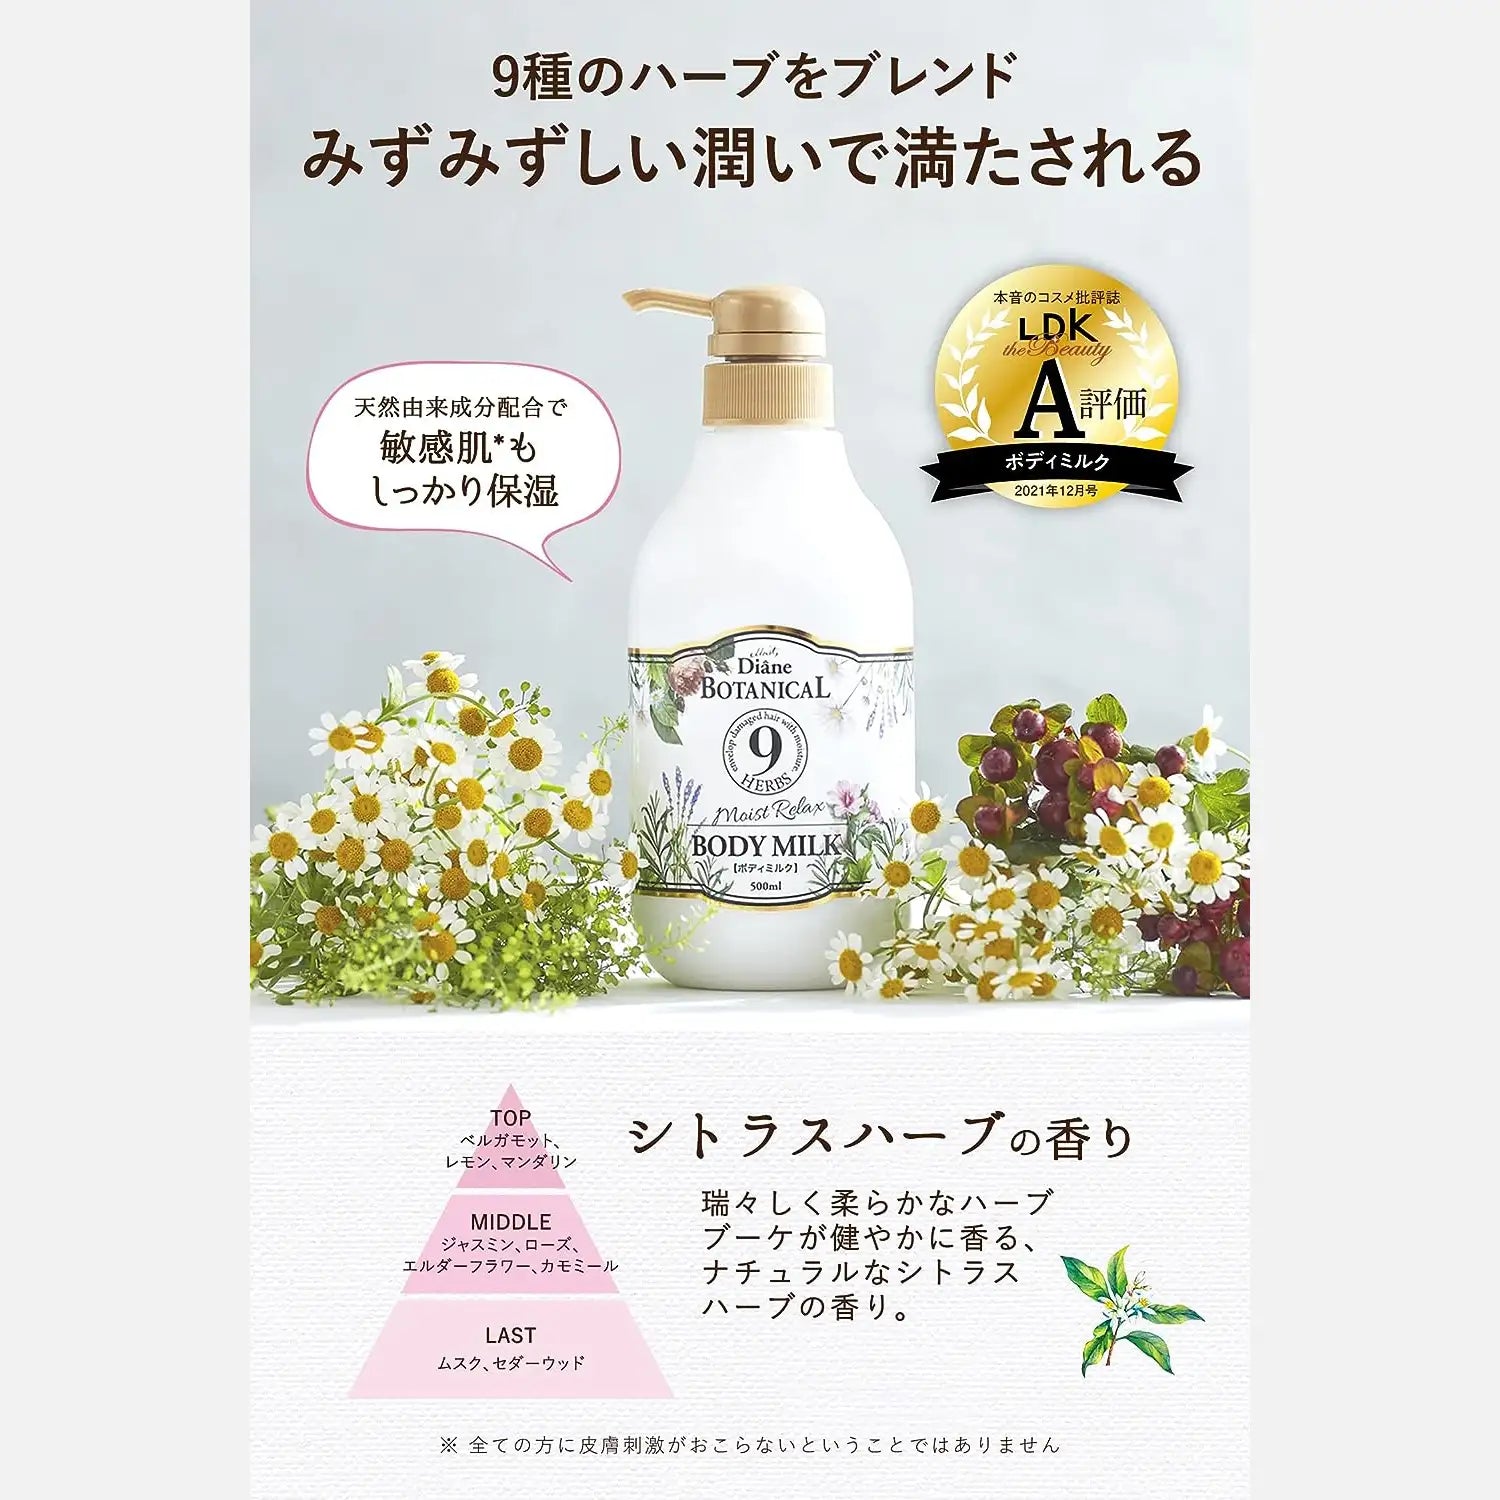 Diane Botanical Deep Moist Body Milk Citrus Herb 500ml - Buy Me Japan